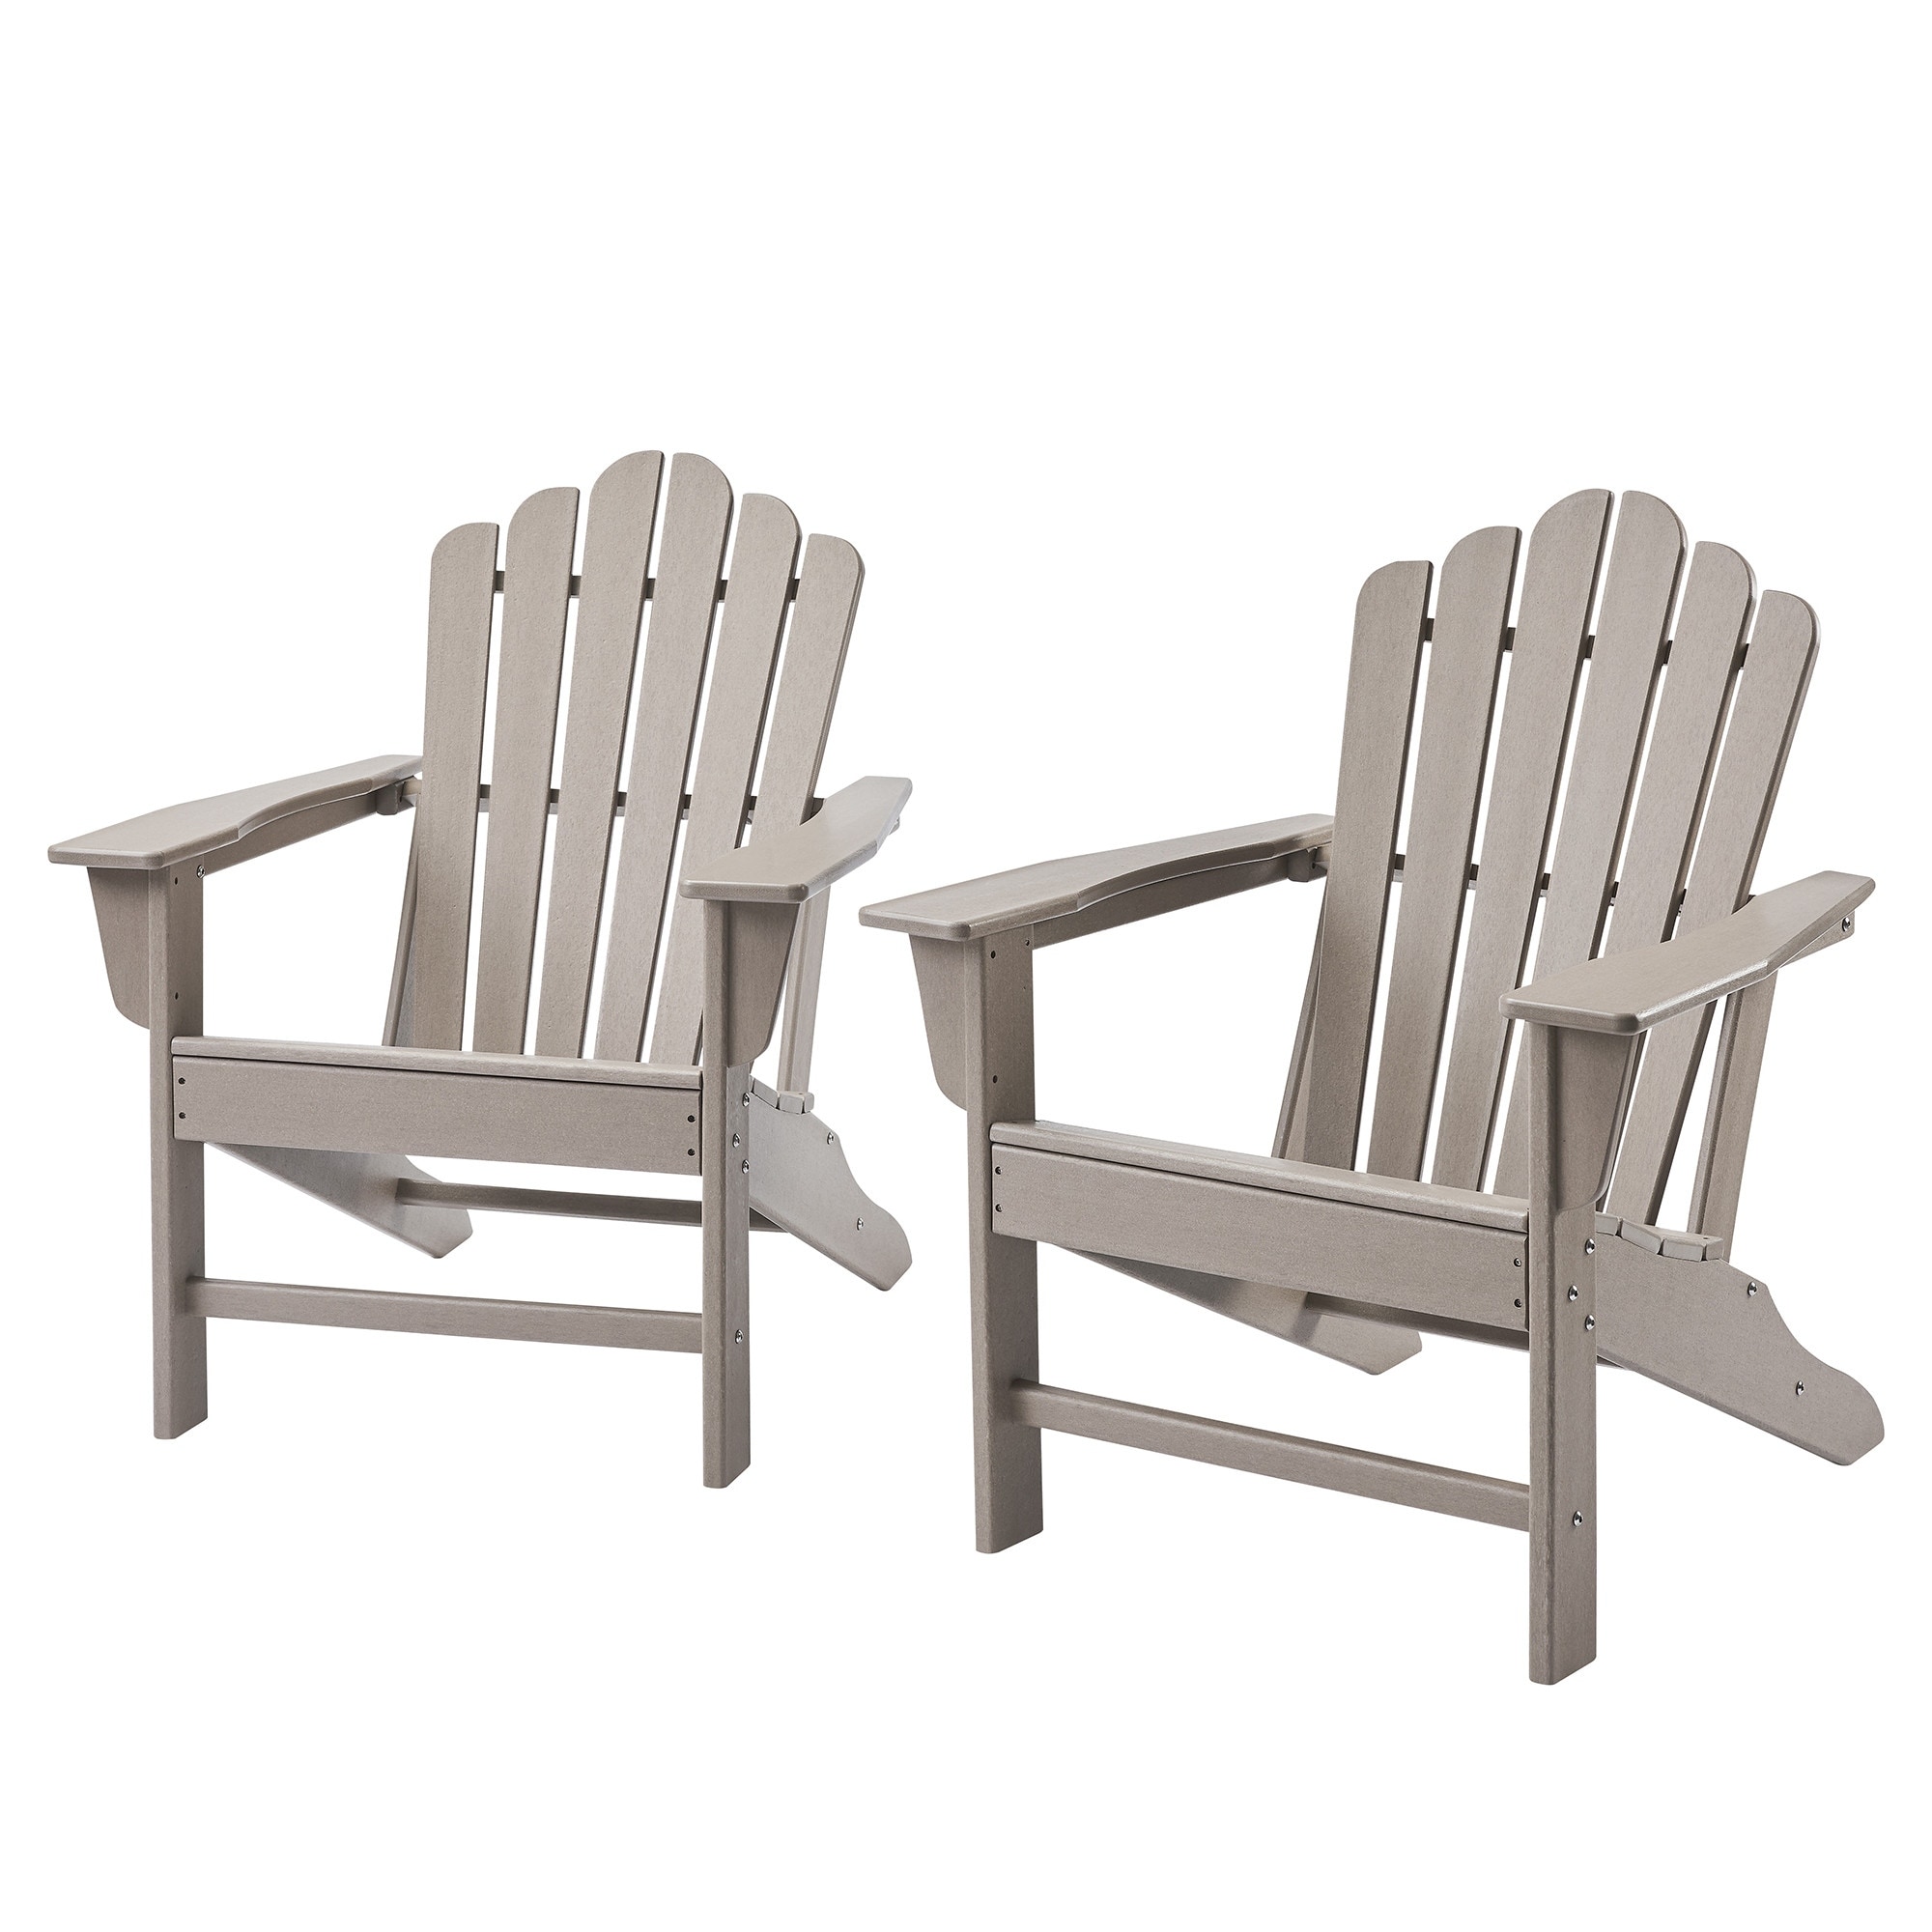 Casainc 2 Pcs Classic Outdoor Adirondack Chair